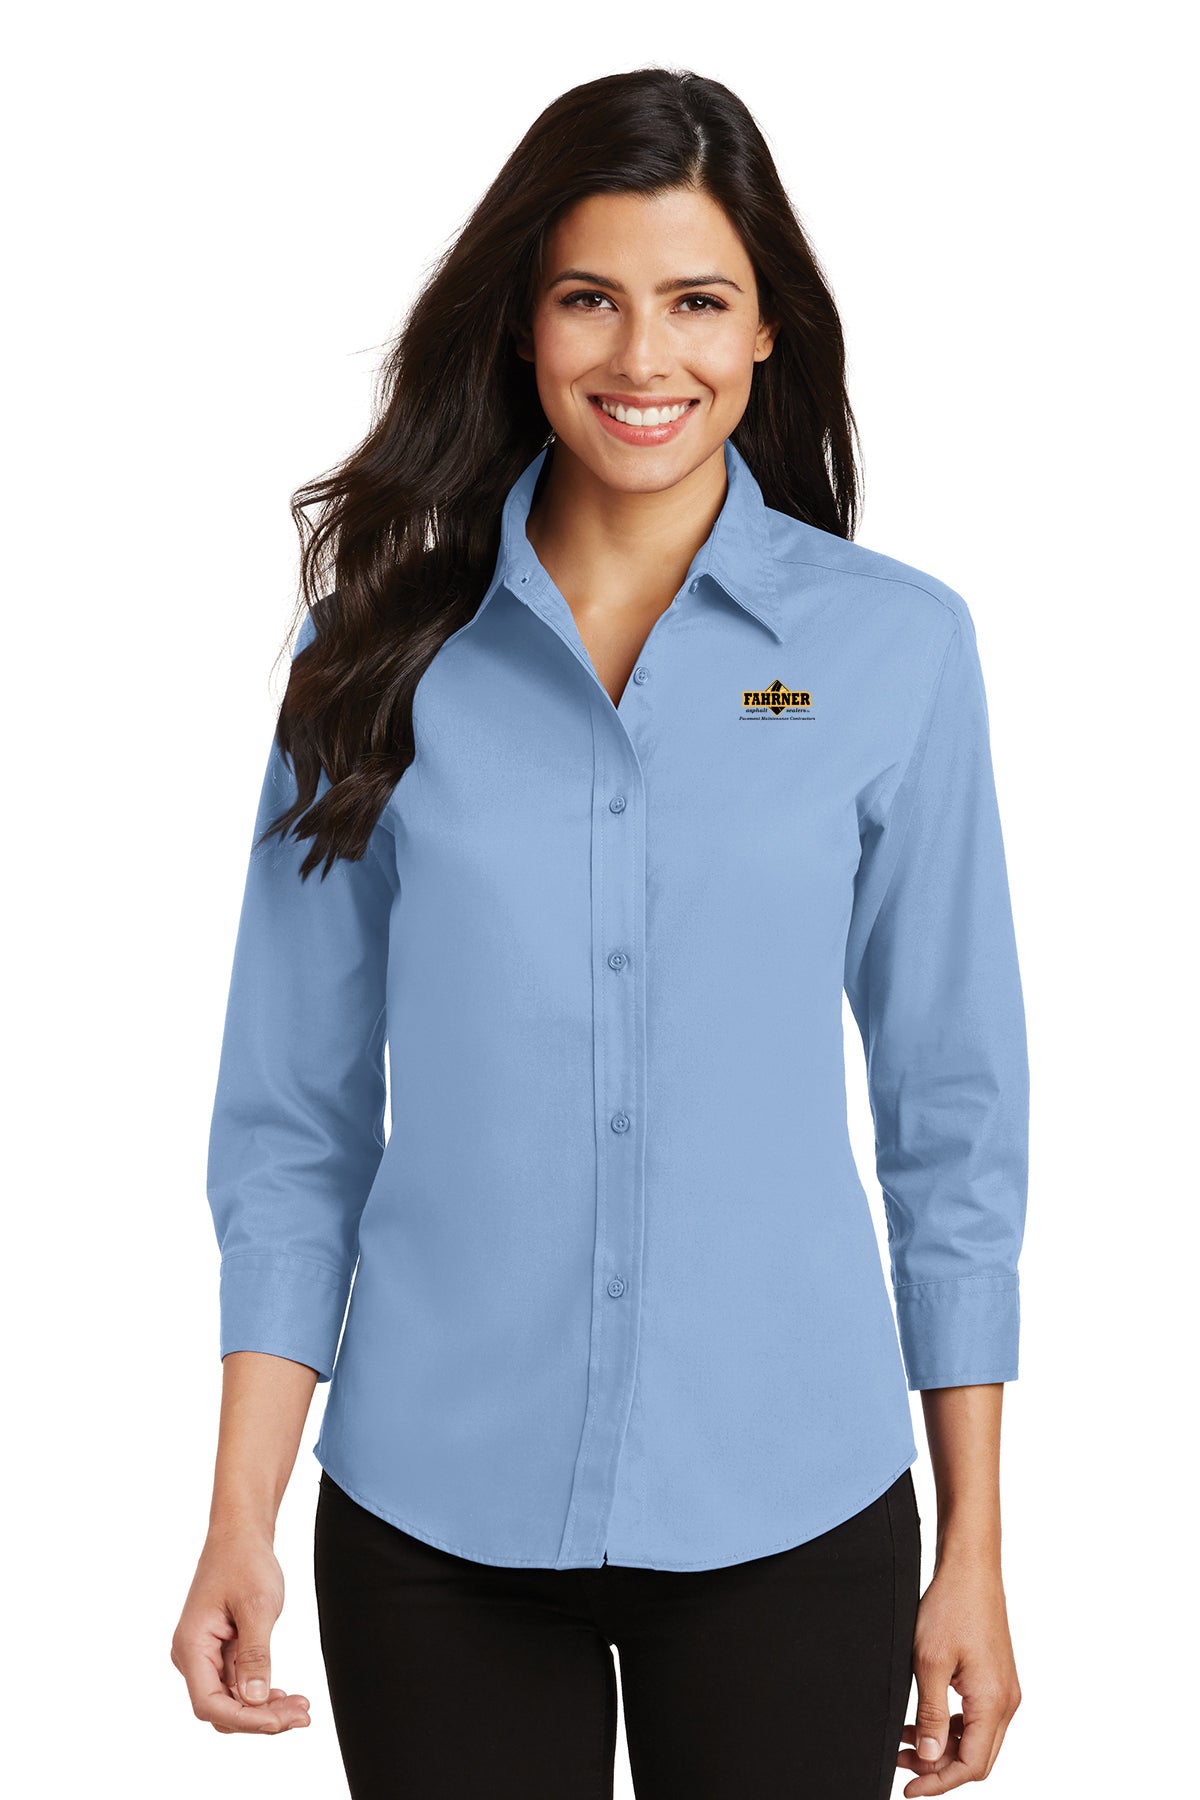 Fahrner Asphalt Ladies Button Up Shirt